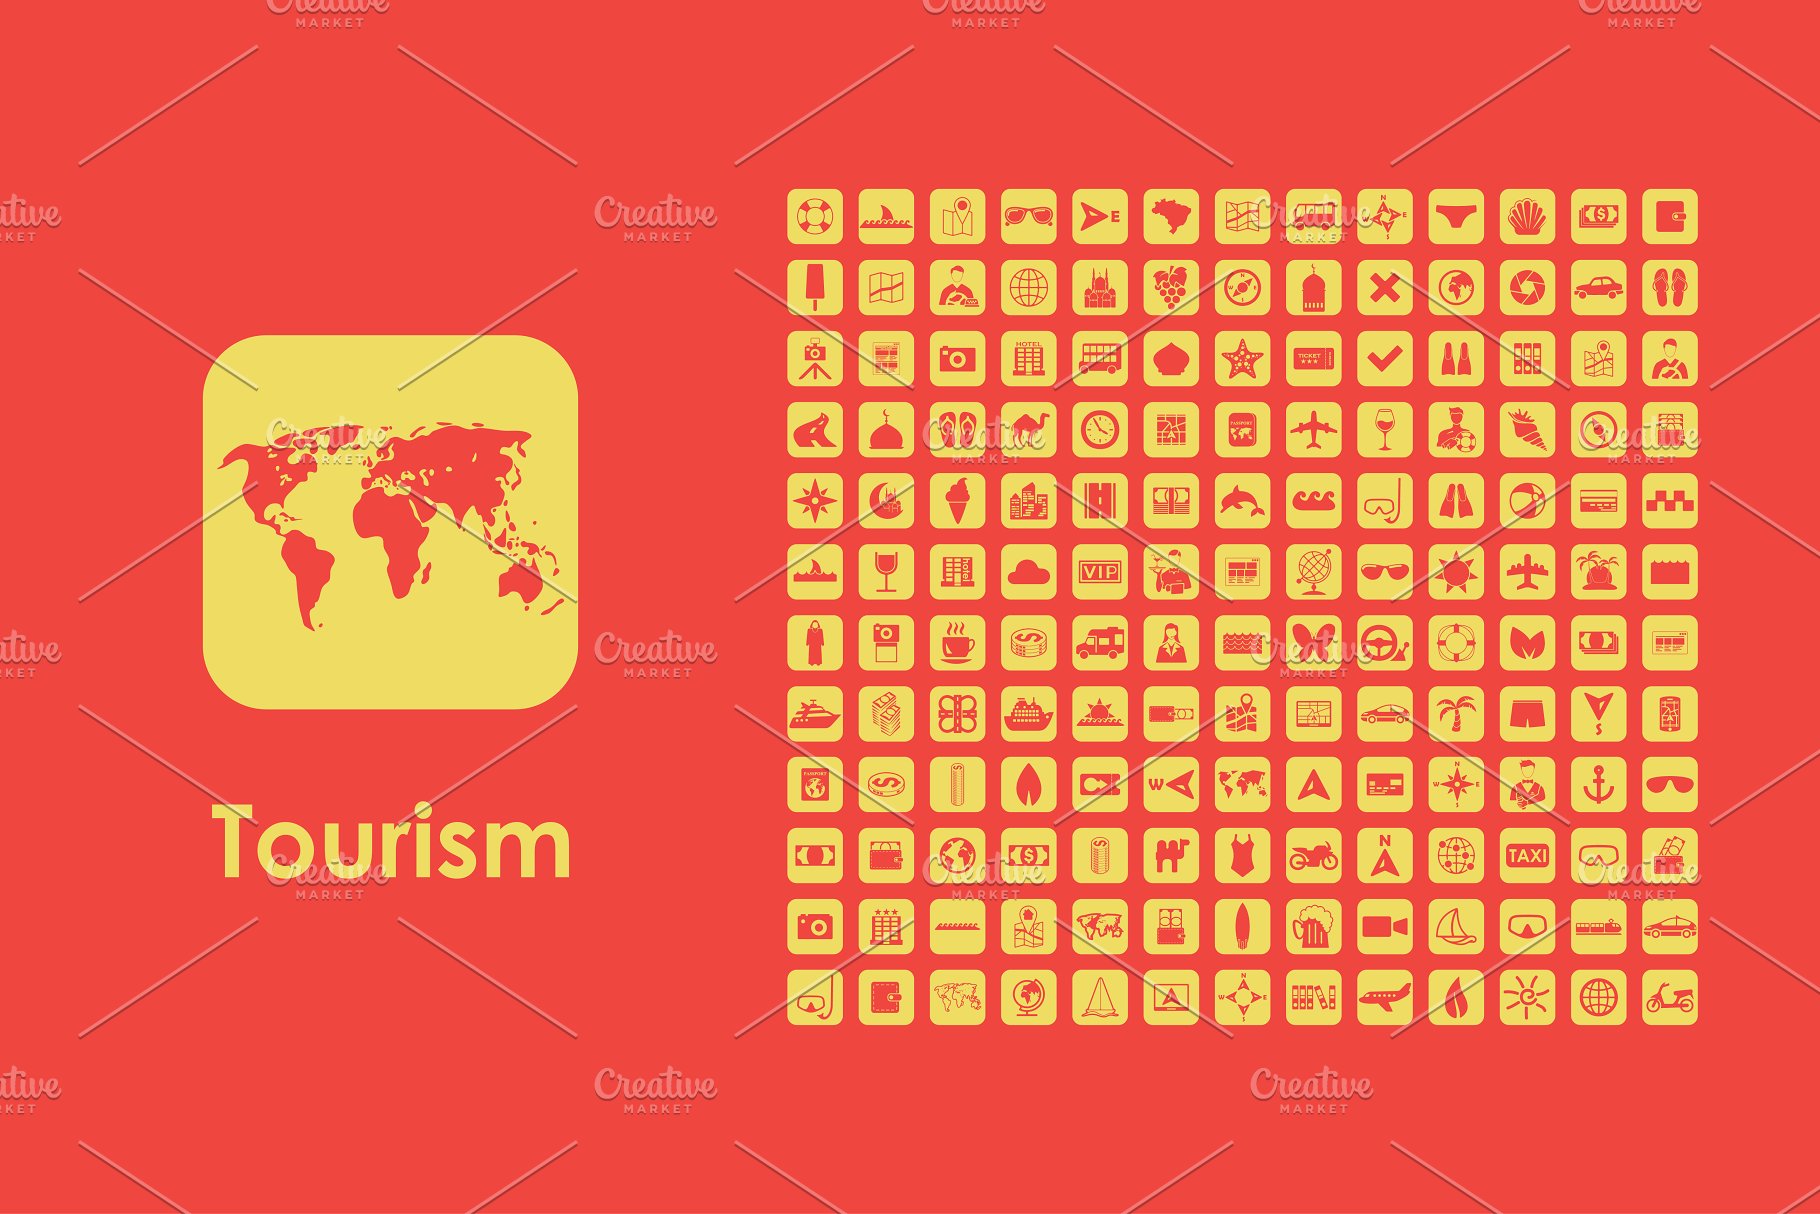 旅游图标 Tourism icons #91232